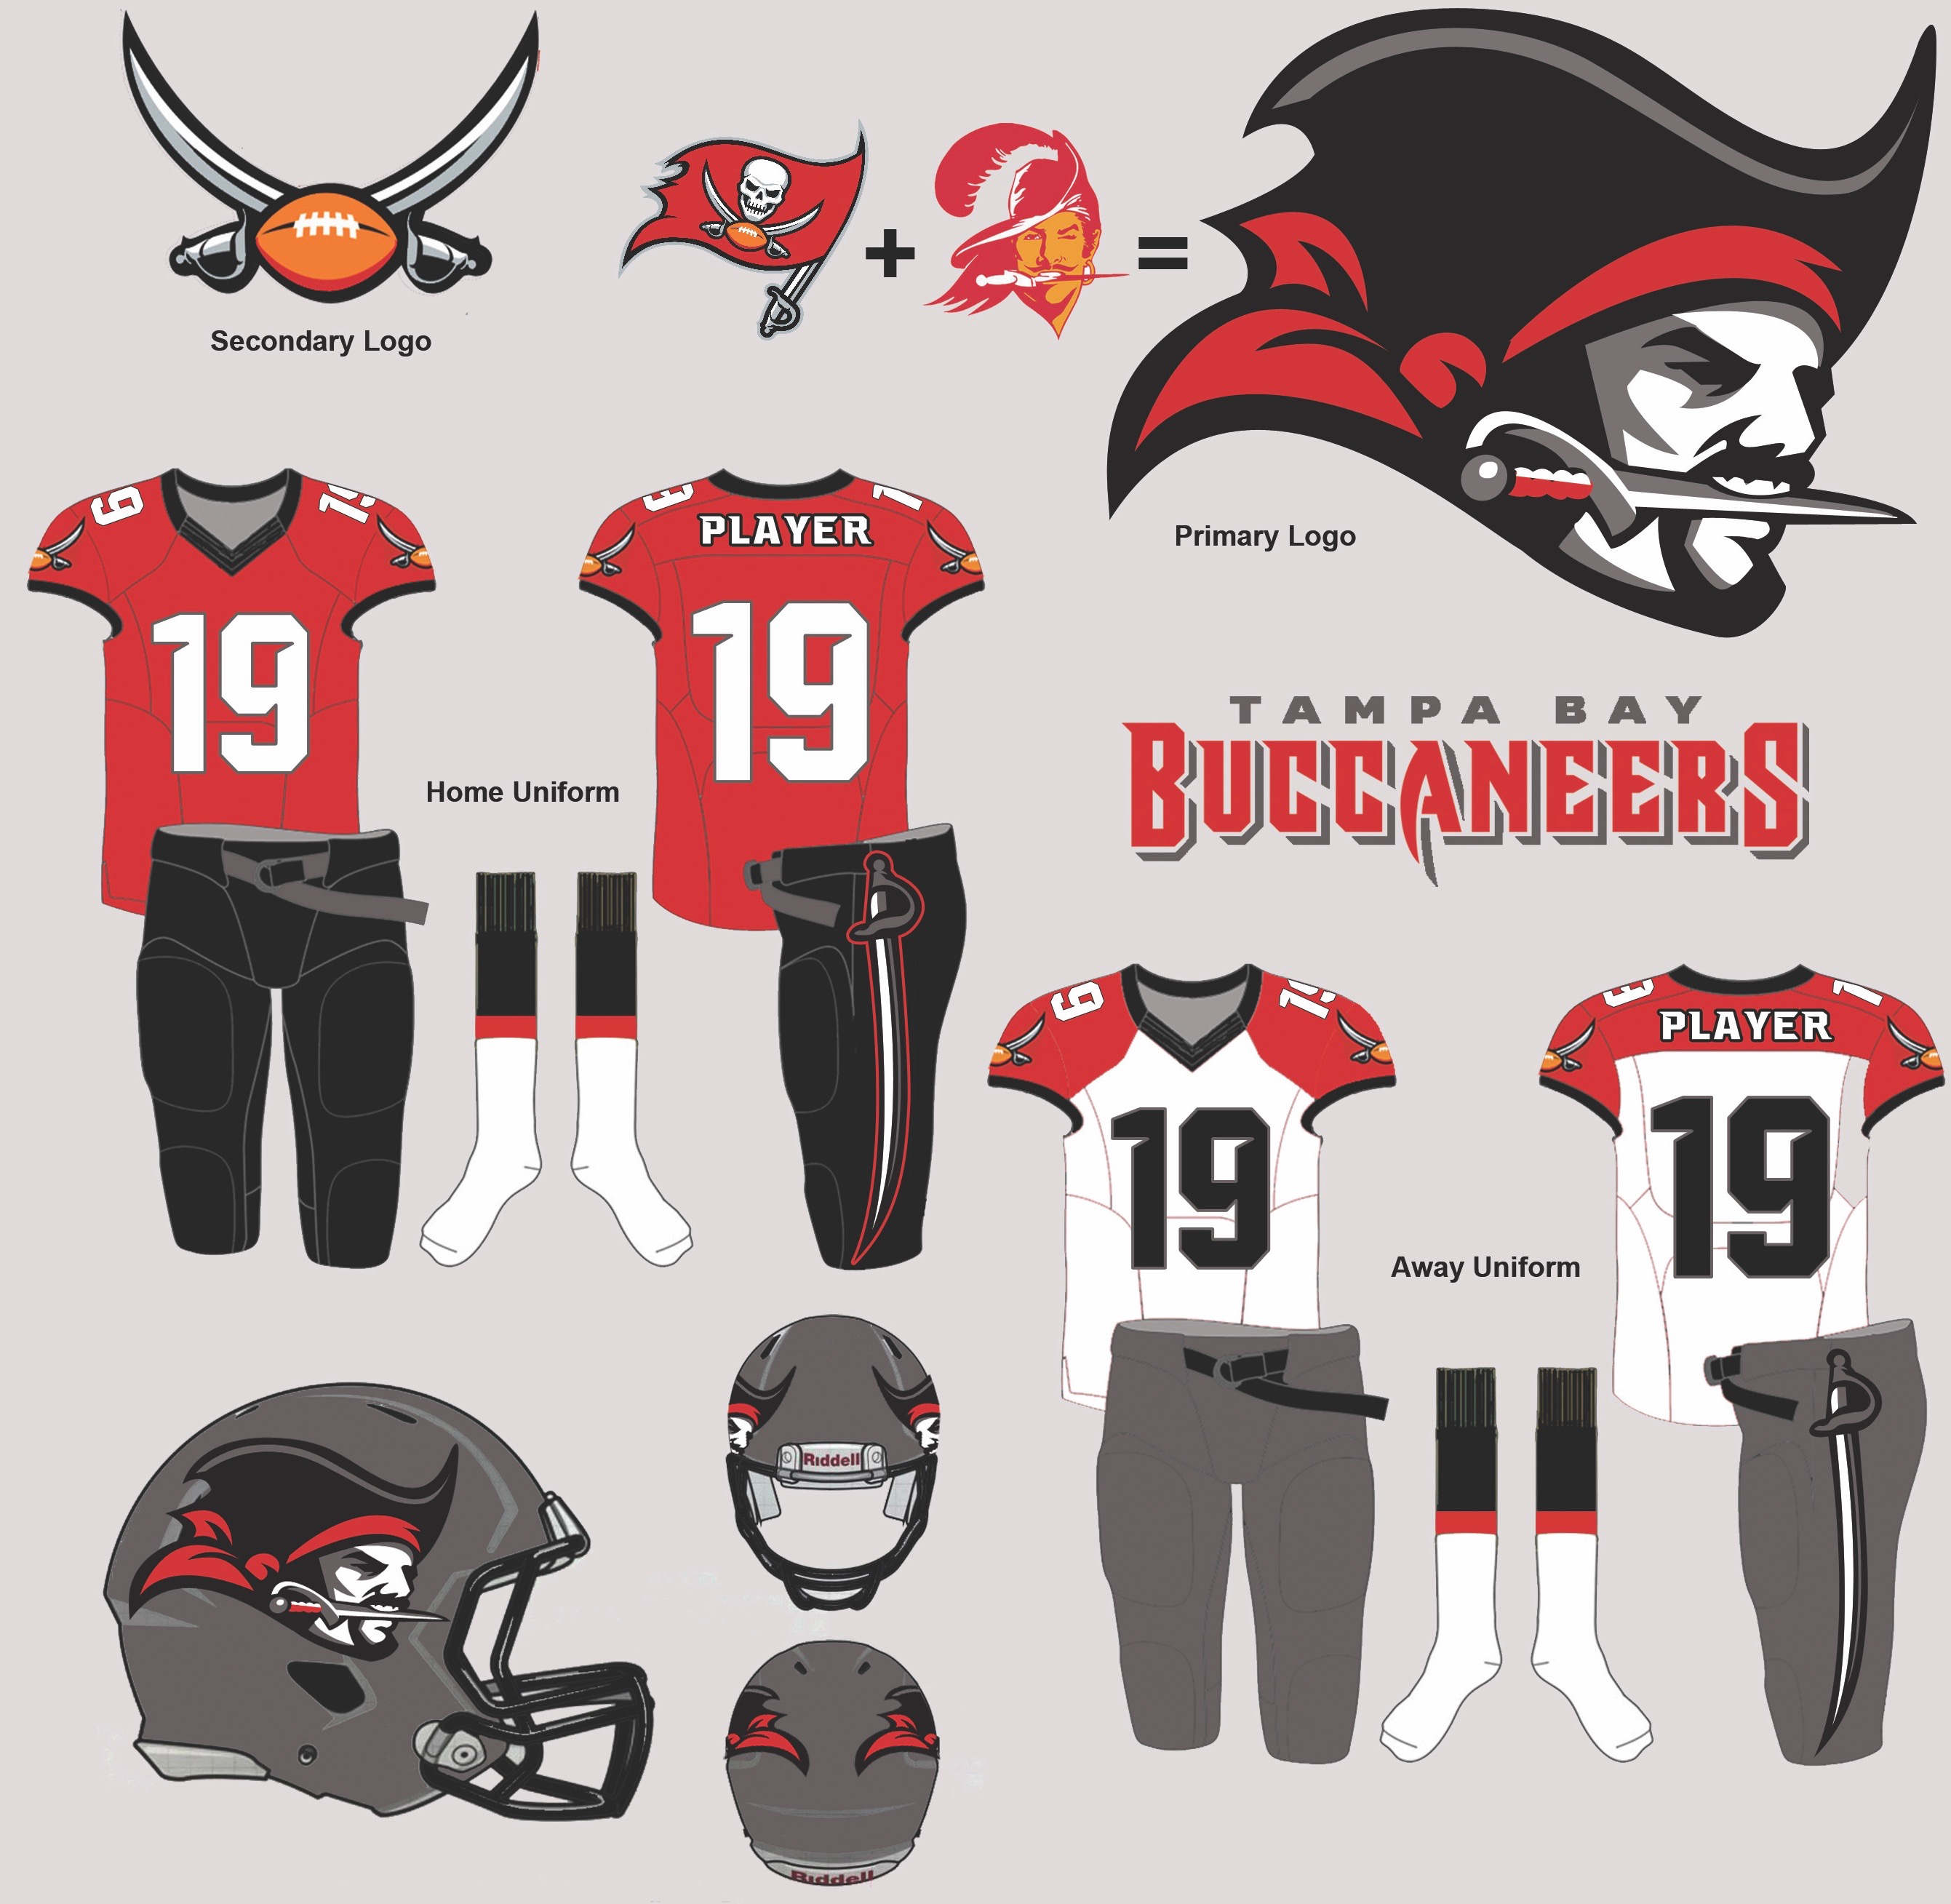 the tampa bay buccaneers new uniforms